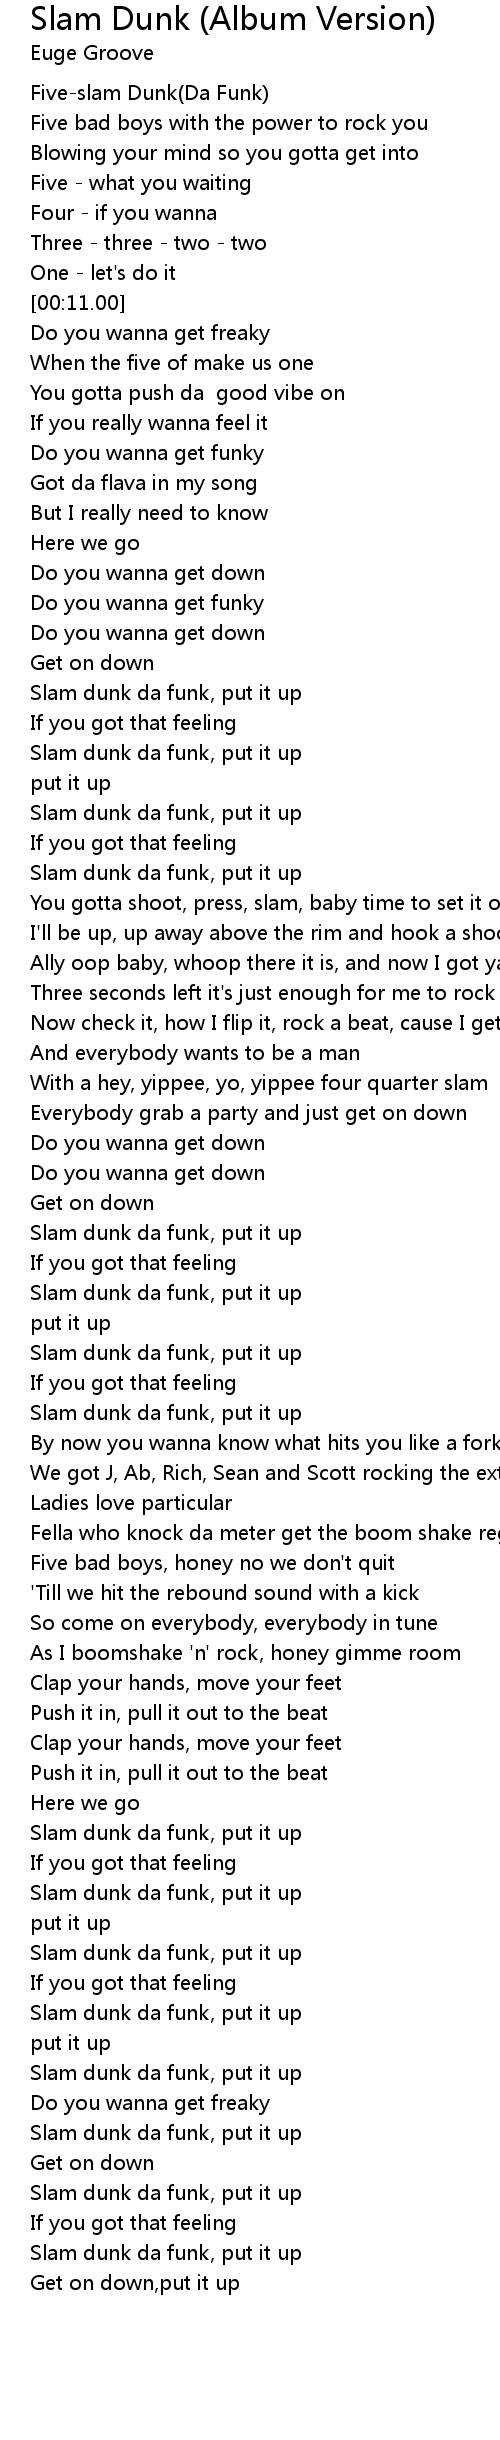 Slam Dunk Album Version Lyrics Follow Lyrics